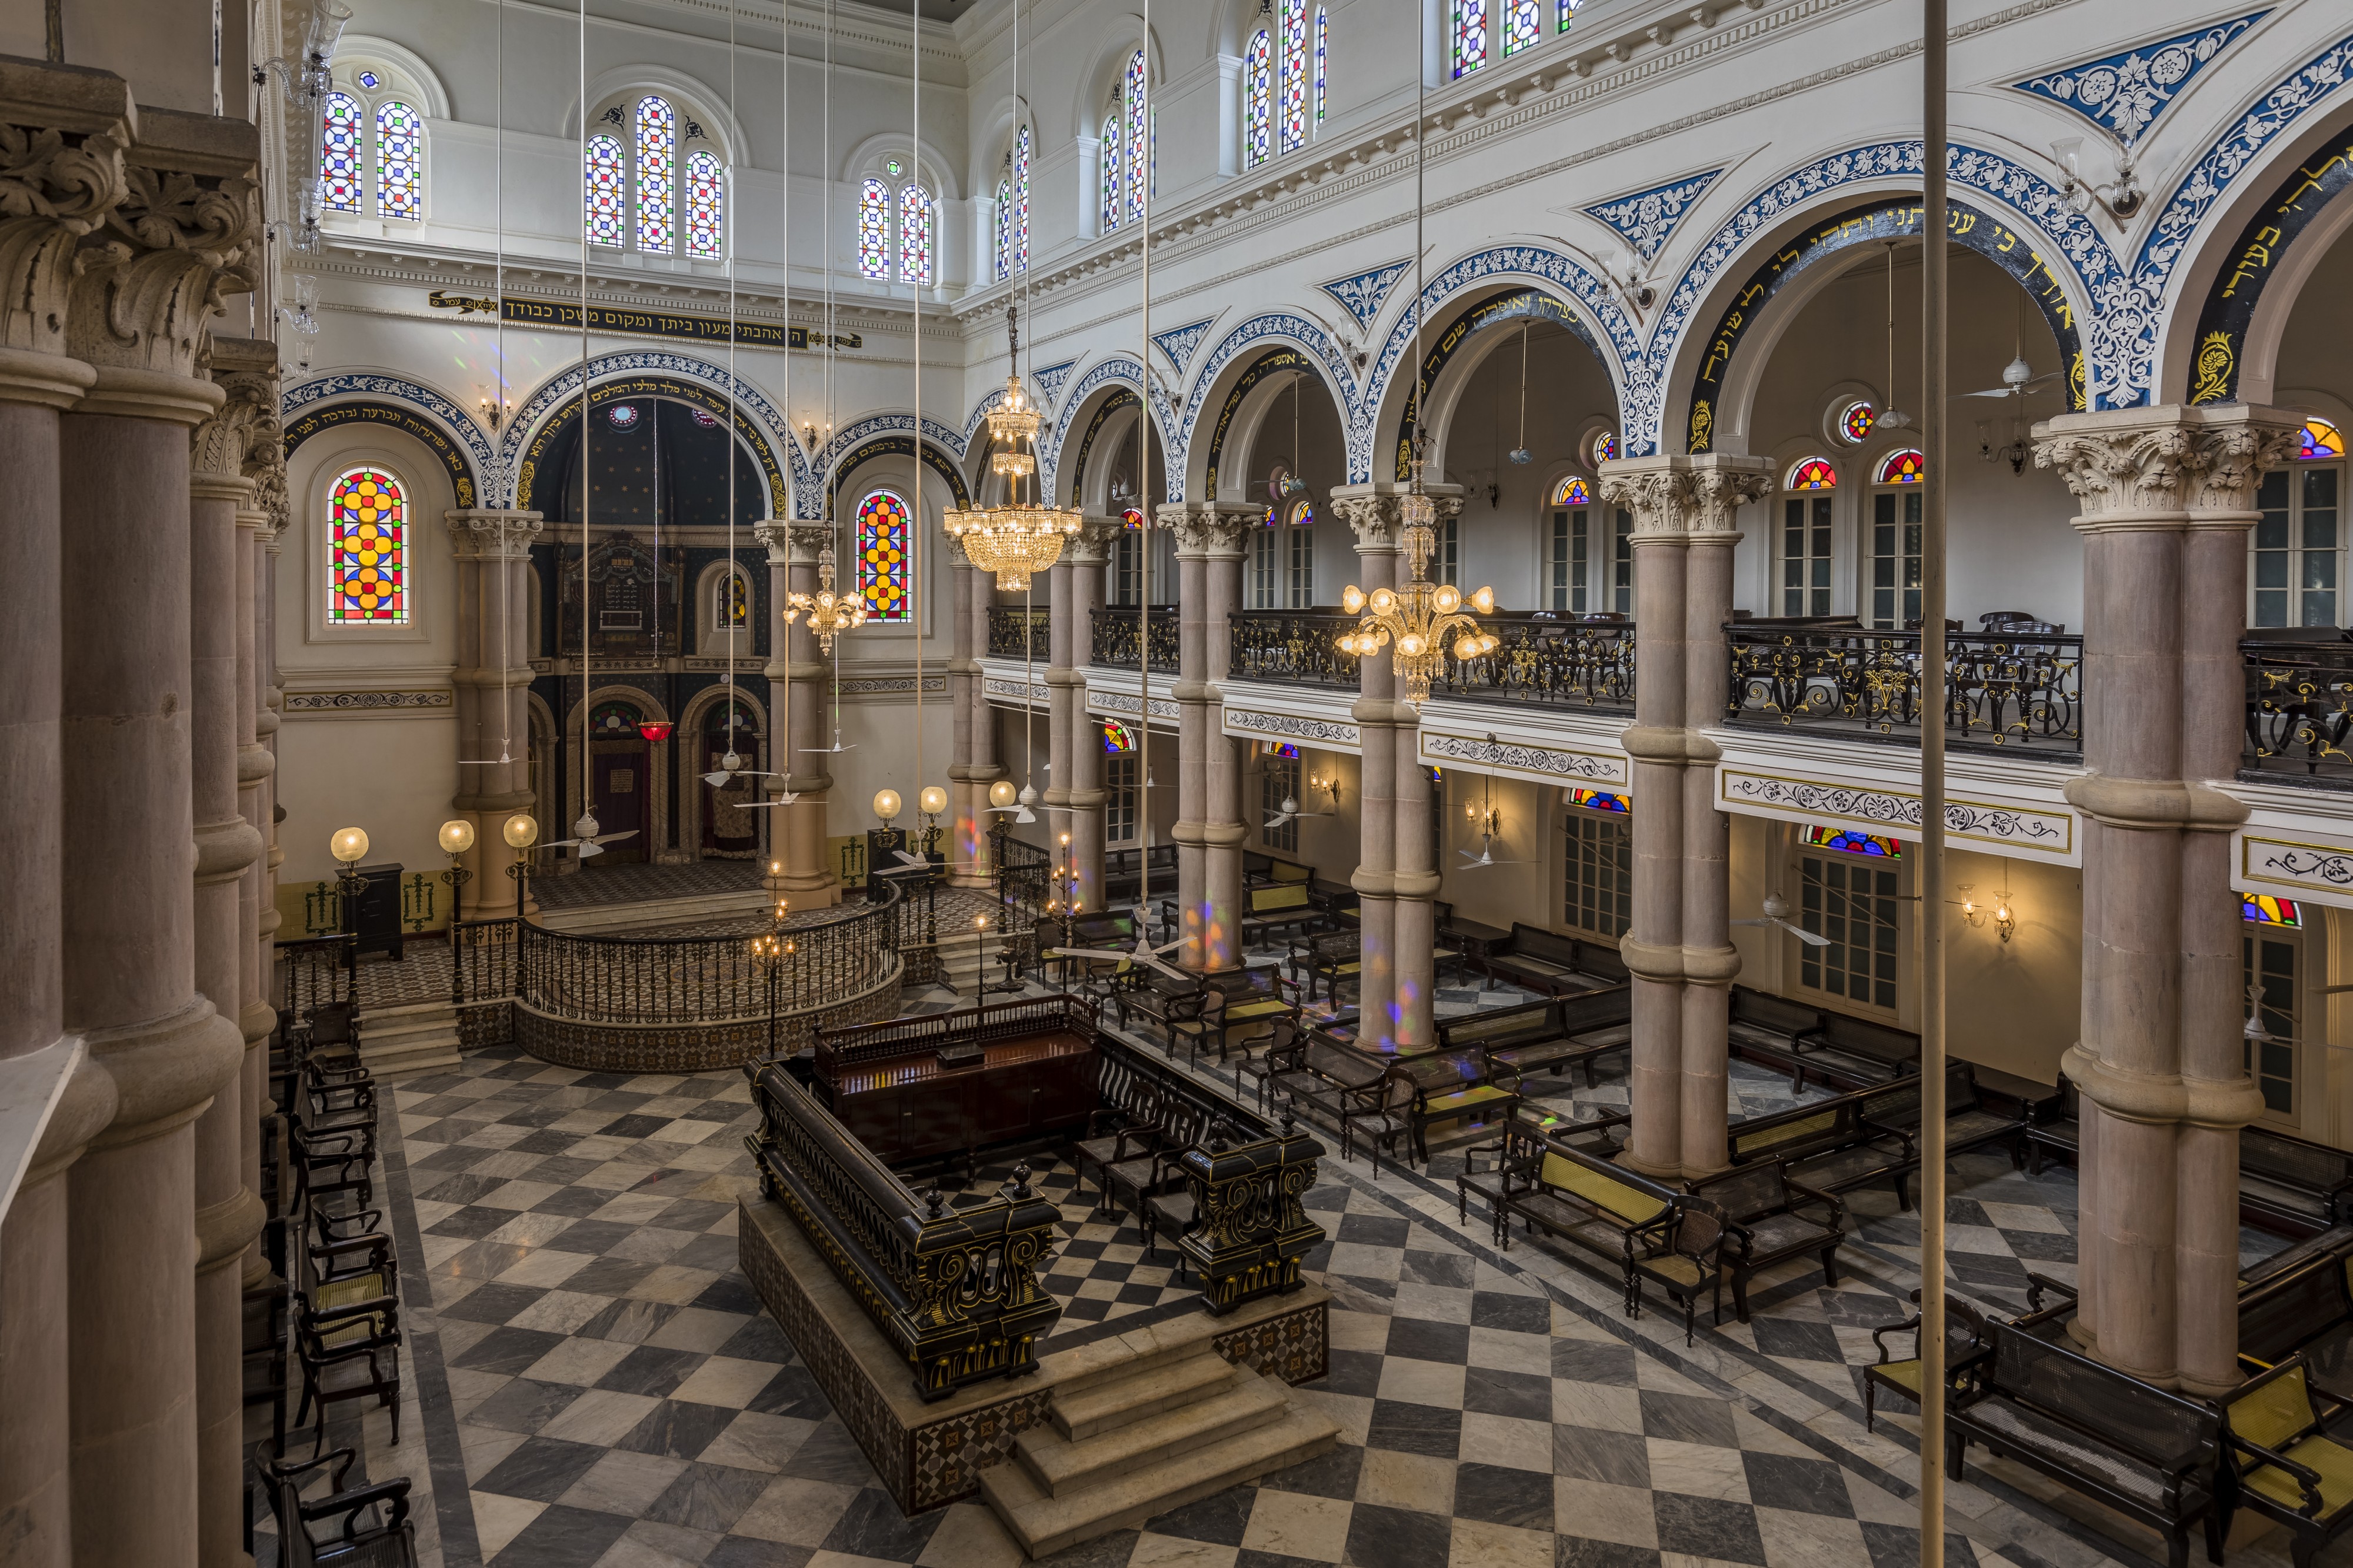 Magen David Synagogue Interiors after restoration